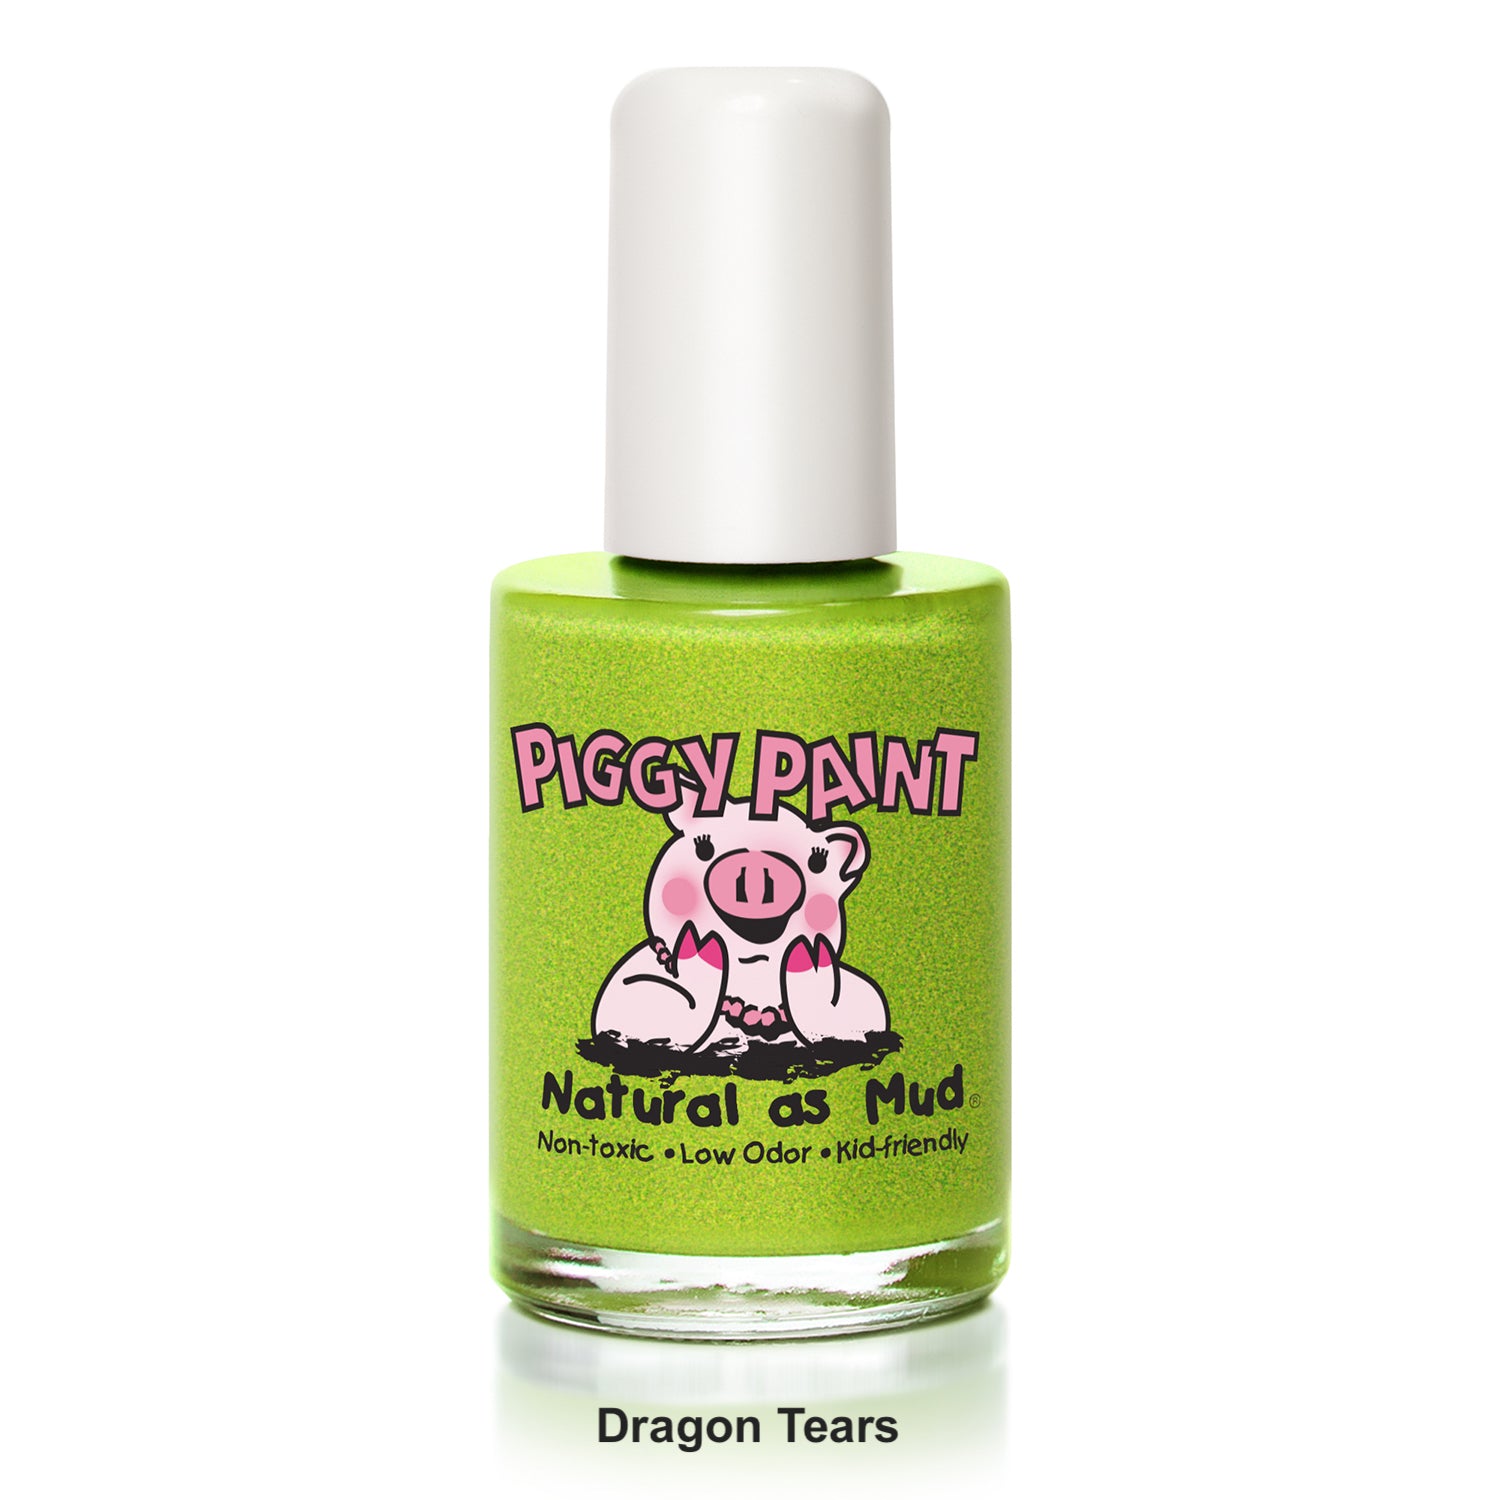 Piggy Paint Nail Polish, Glamour Girl - Parents' Favorite